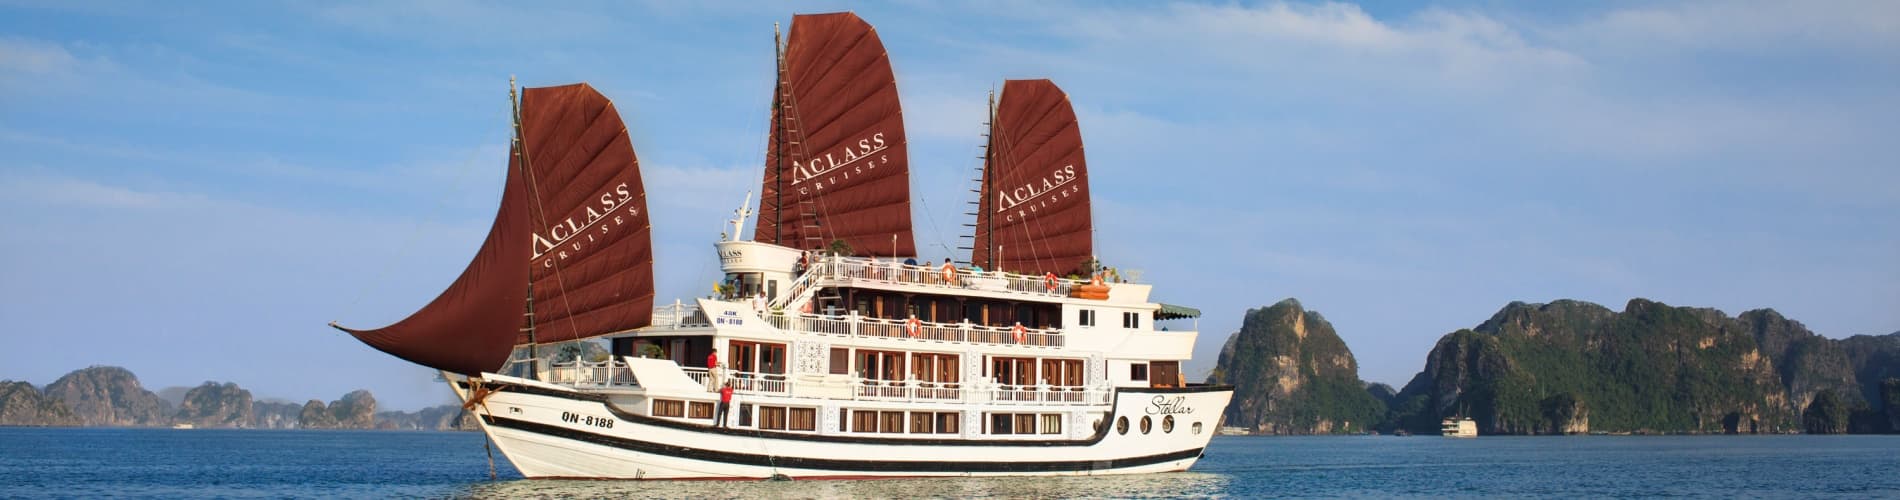 Aclass Legend Cruise